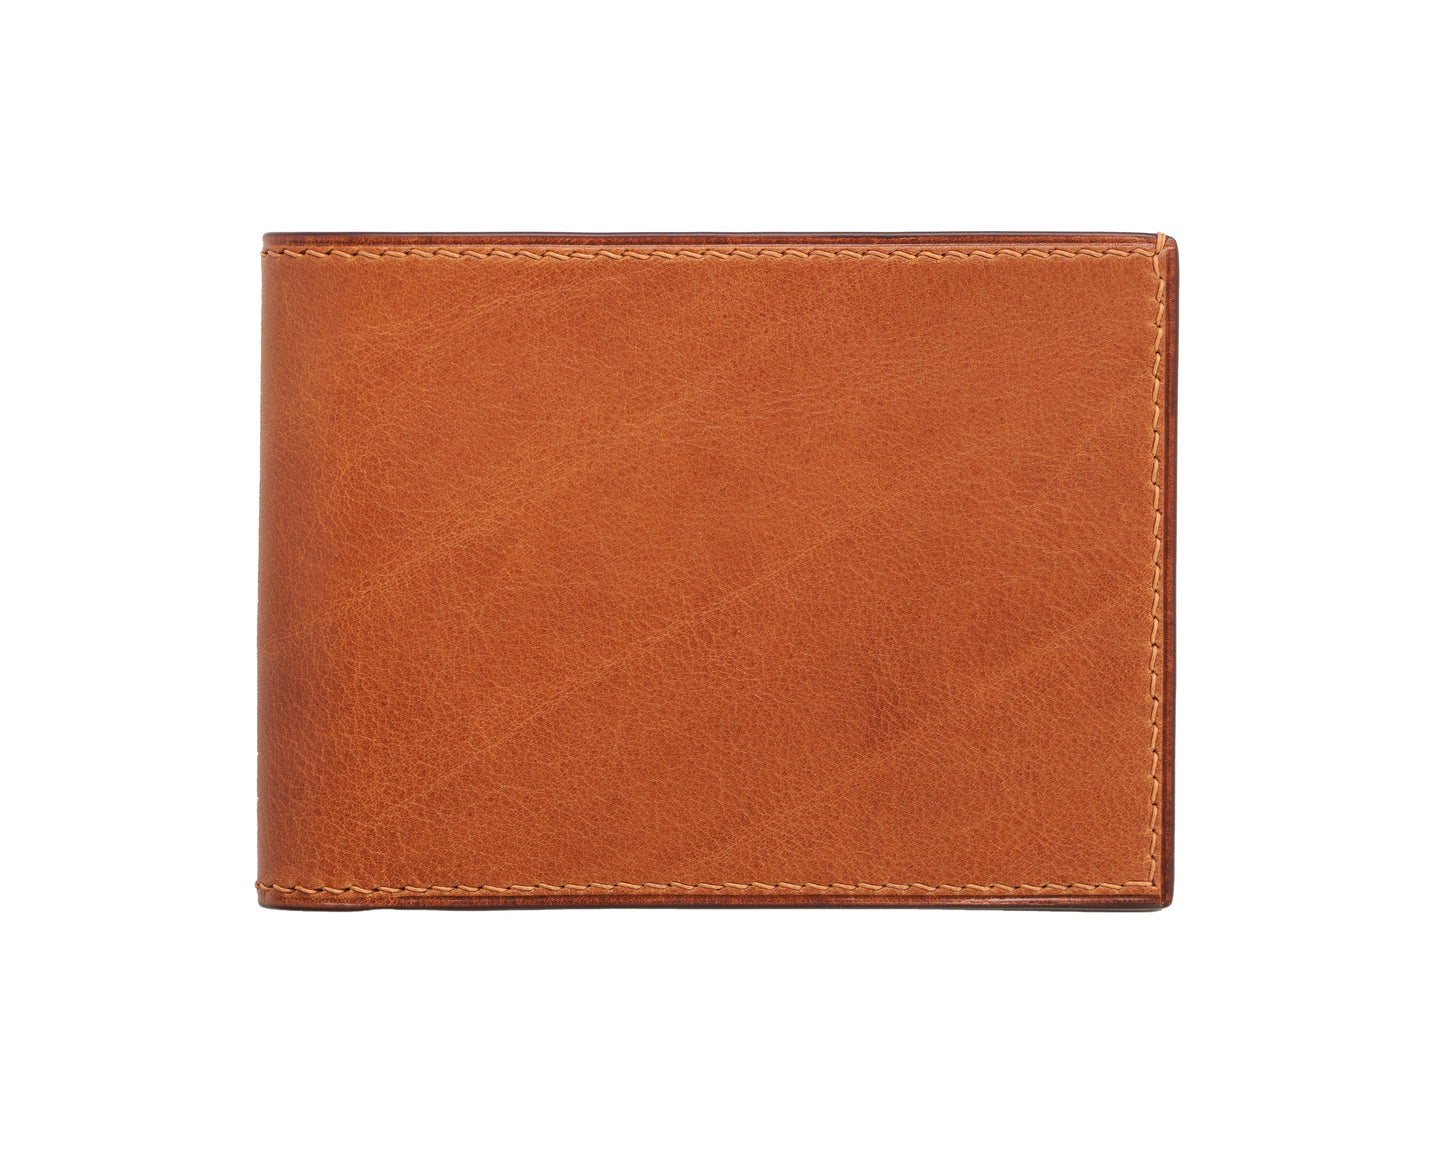 Vegetable Tanned Leather Wallet - Brown - 8-Pocket Slim